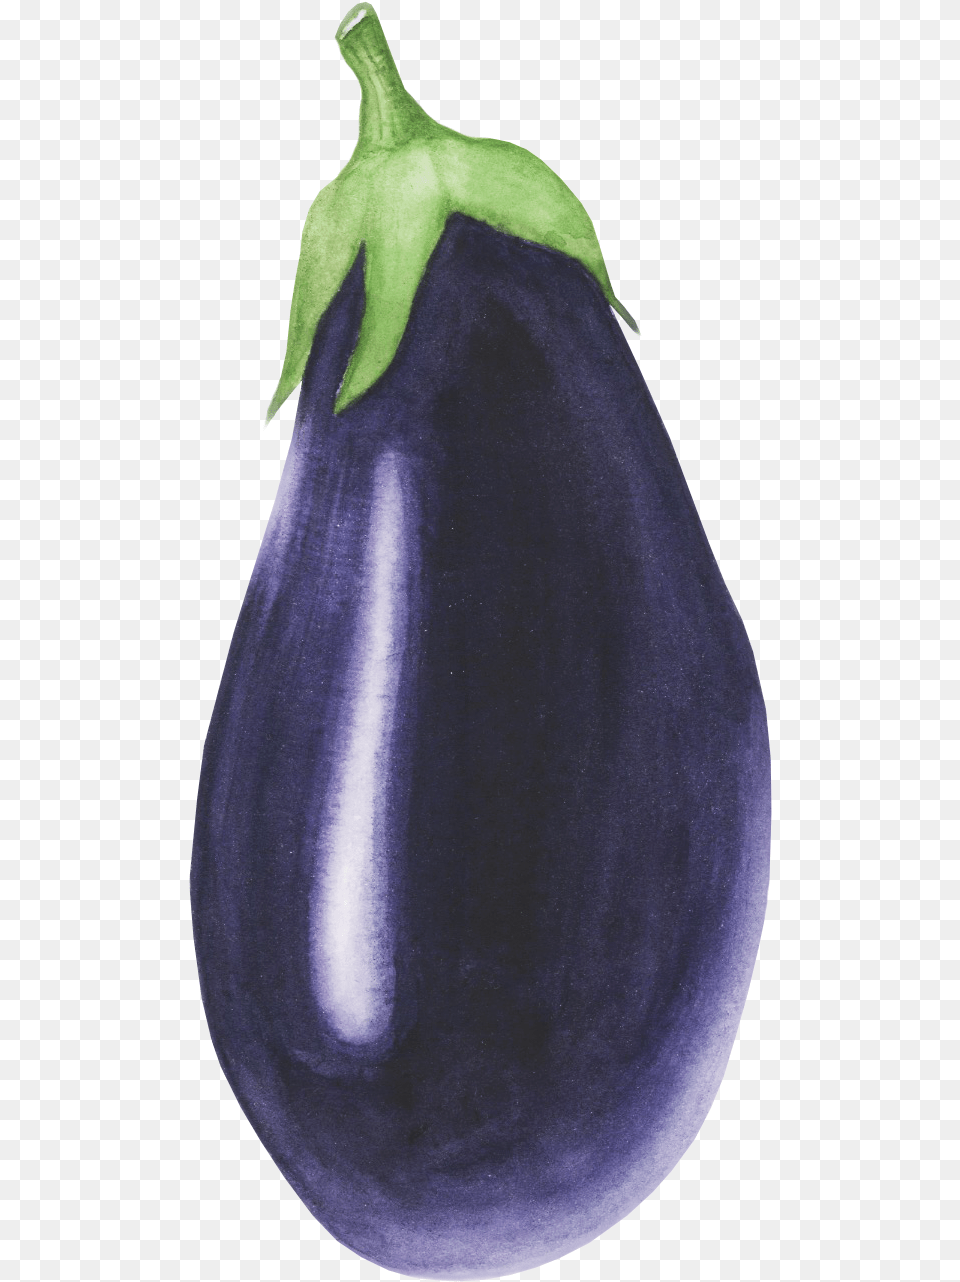 Eggplant Sticker By Elizabeth Eggplant, Food, Produce, Plant, Vegetable Png Image